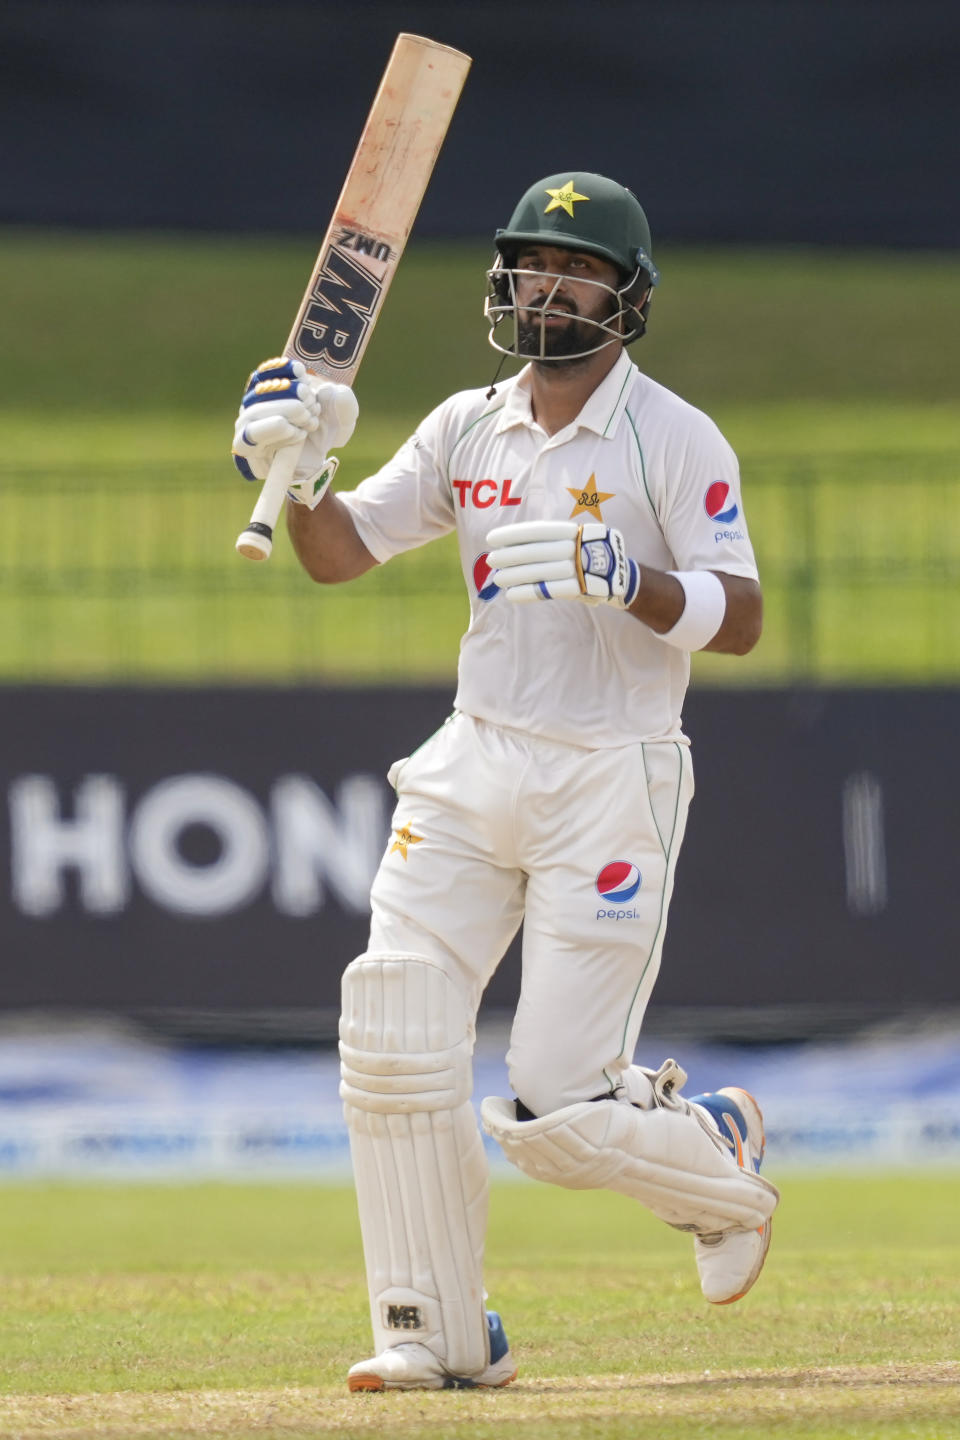 Pakistan's Abdullah Shafique celebrates scoring a century during the third day of the second cricket test match between Sri Lanka and Pakistan in Colombo, Sri Lanka on Wednesday, Jul. 26. (AP Photo/Eranga Jayawardena)